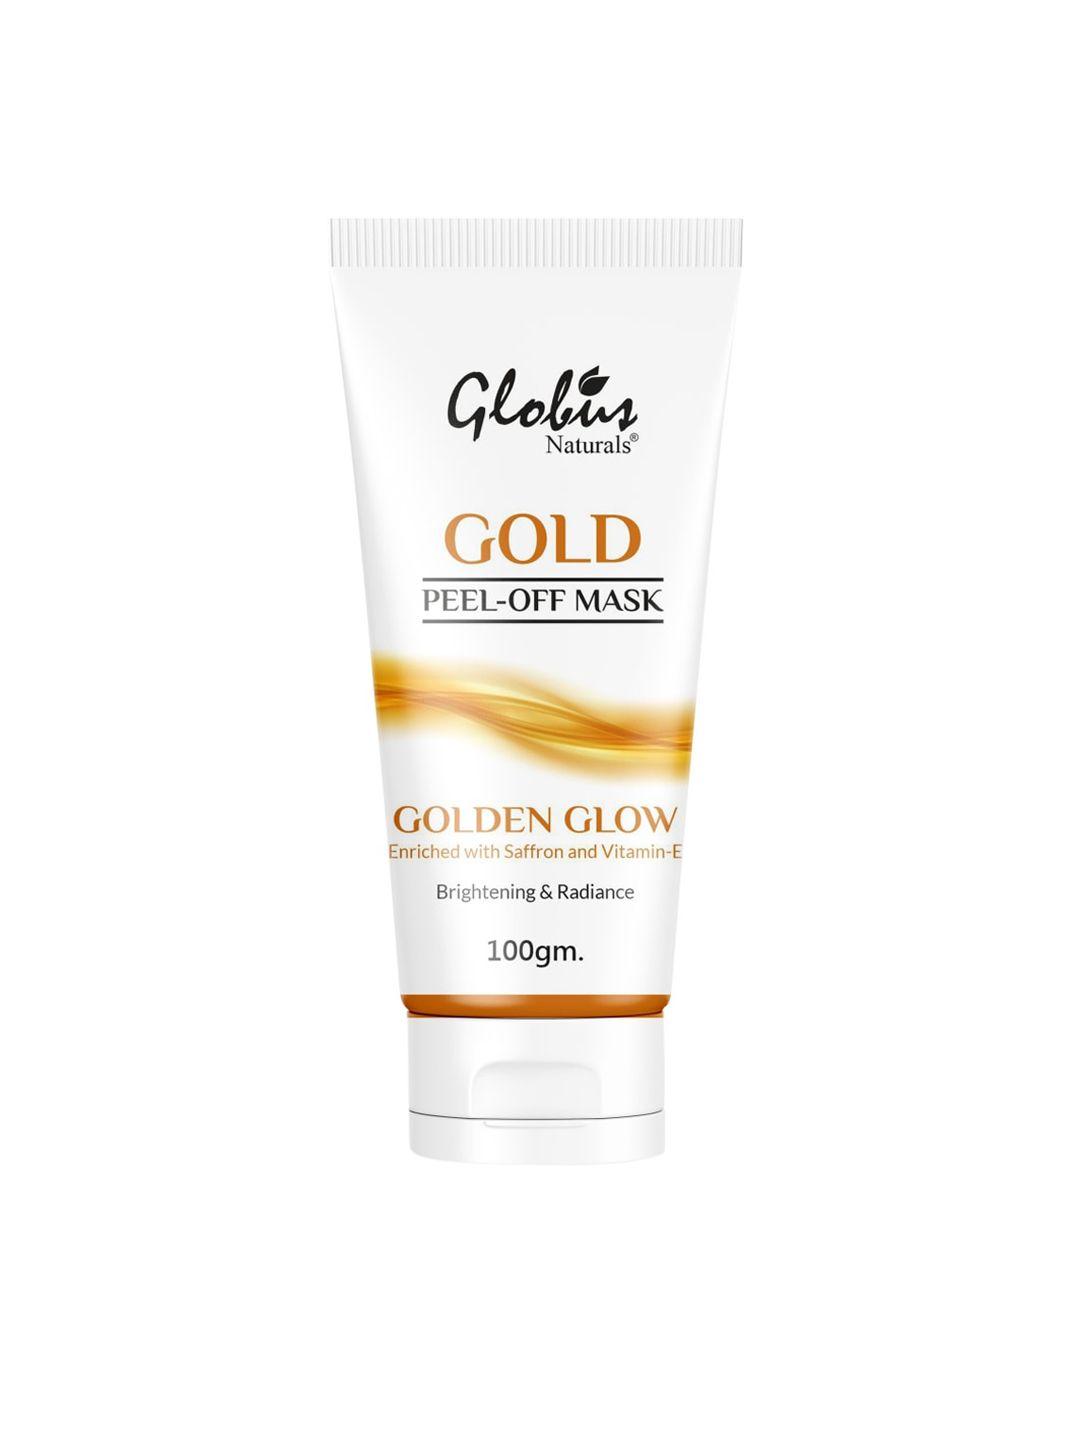 globus naturals golden glow saffron & vit e gold peel off mask 100g